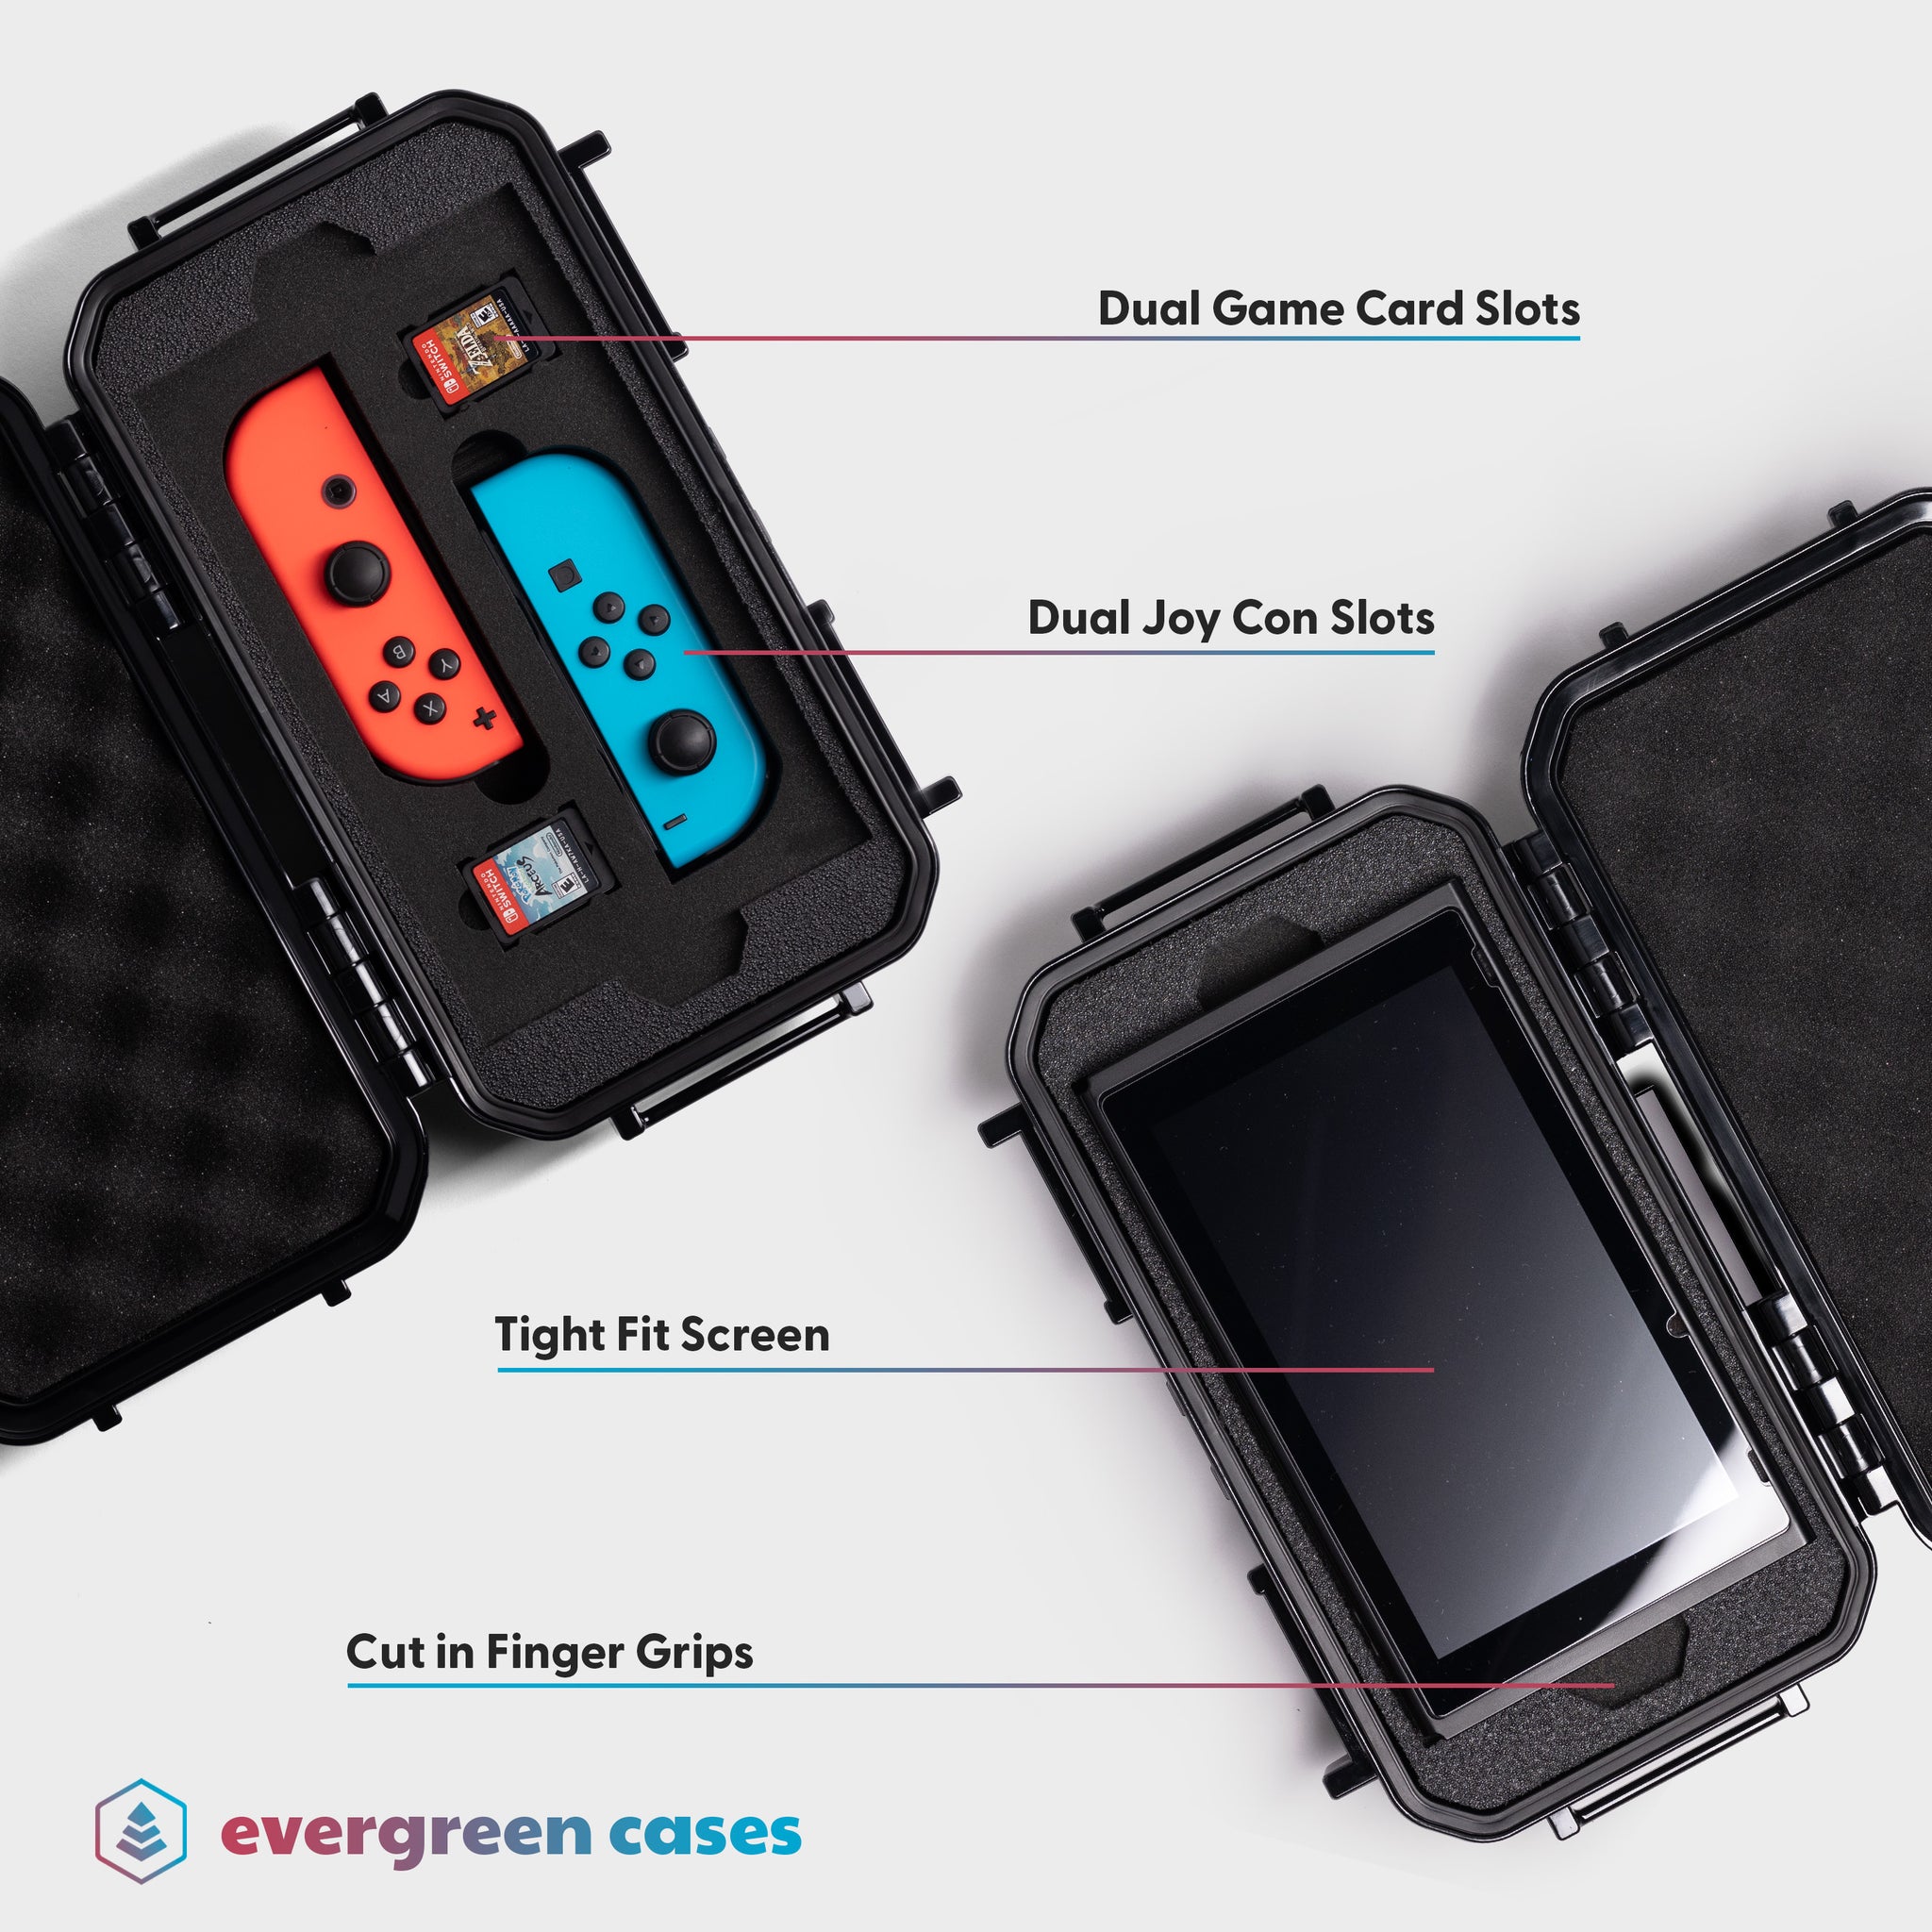 Evergreen 56 - Nintendo Switch Case (Pocket Monster, Black Edition)